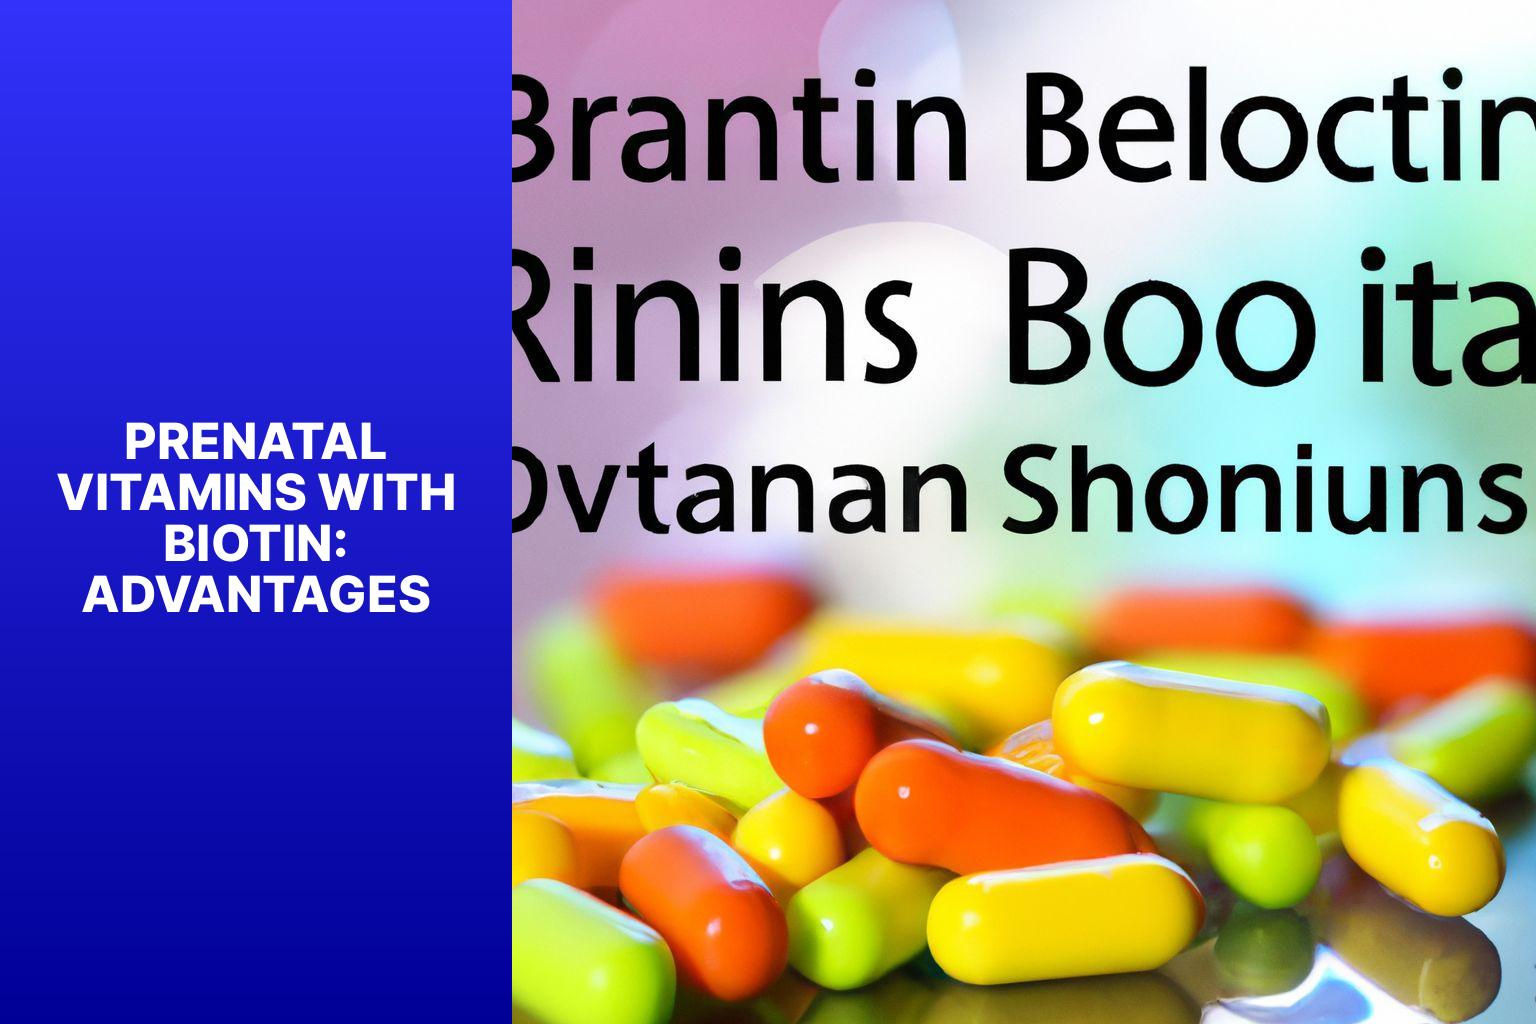 Prenatal Vitamins with Biotin: Advantages - Prenatal Vitamins: With or Without Biotin? Comparing the advantages and disadvantages of prenatal vitamins containing biotin. 